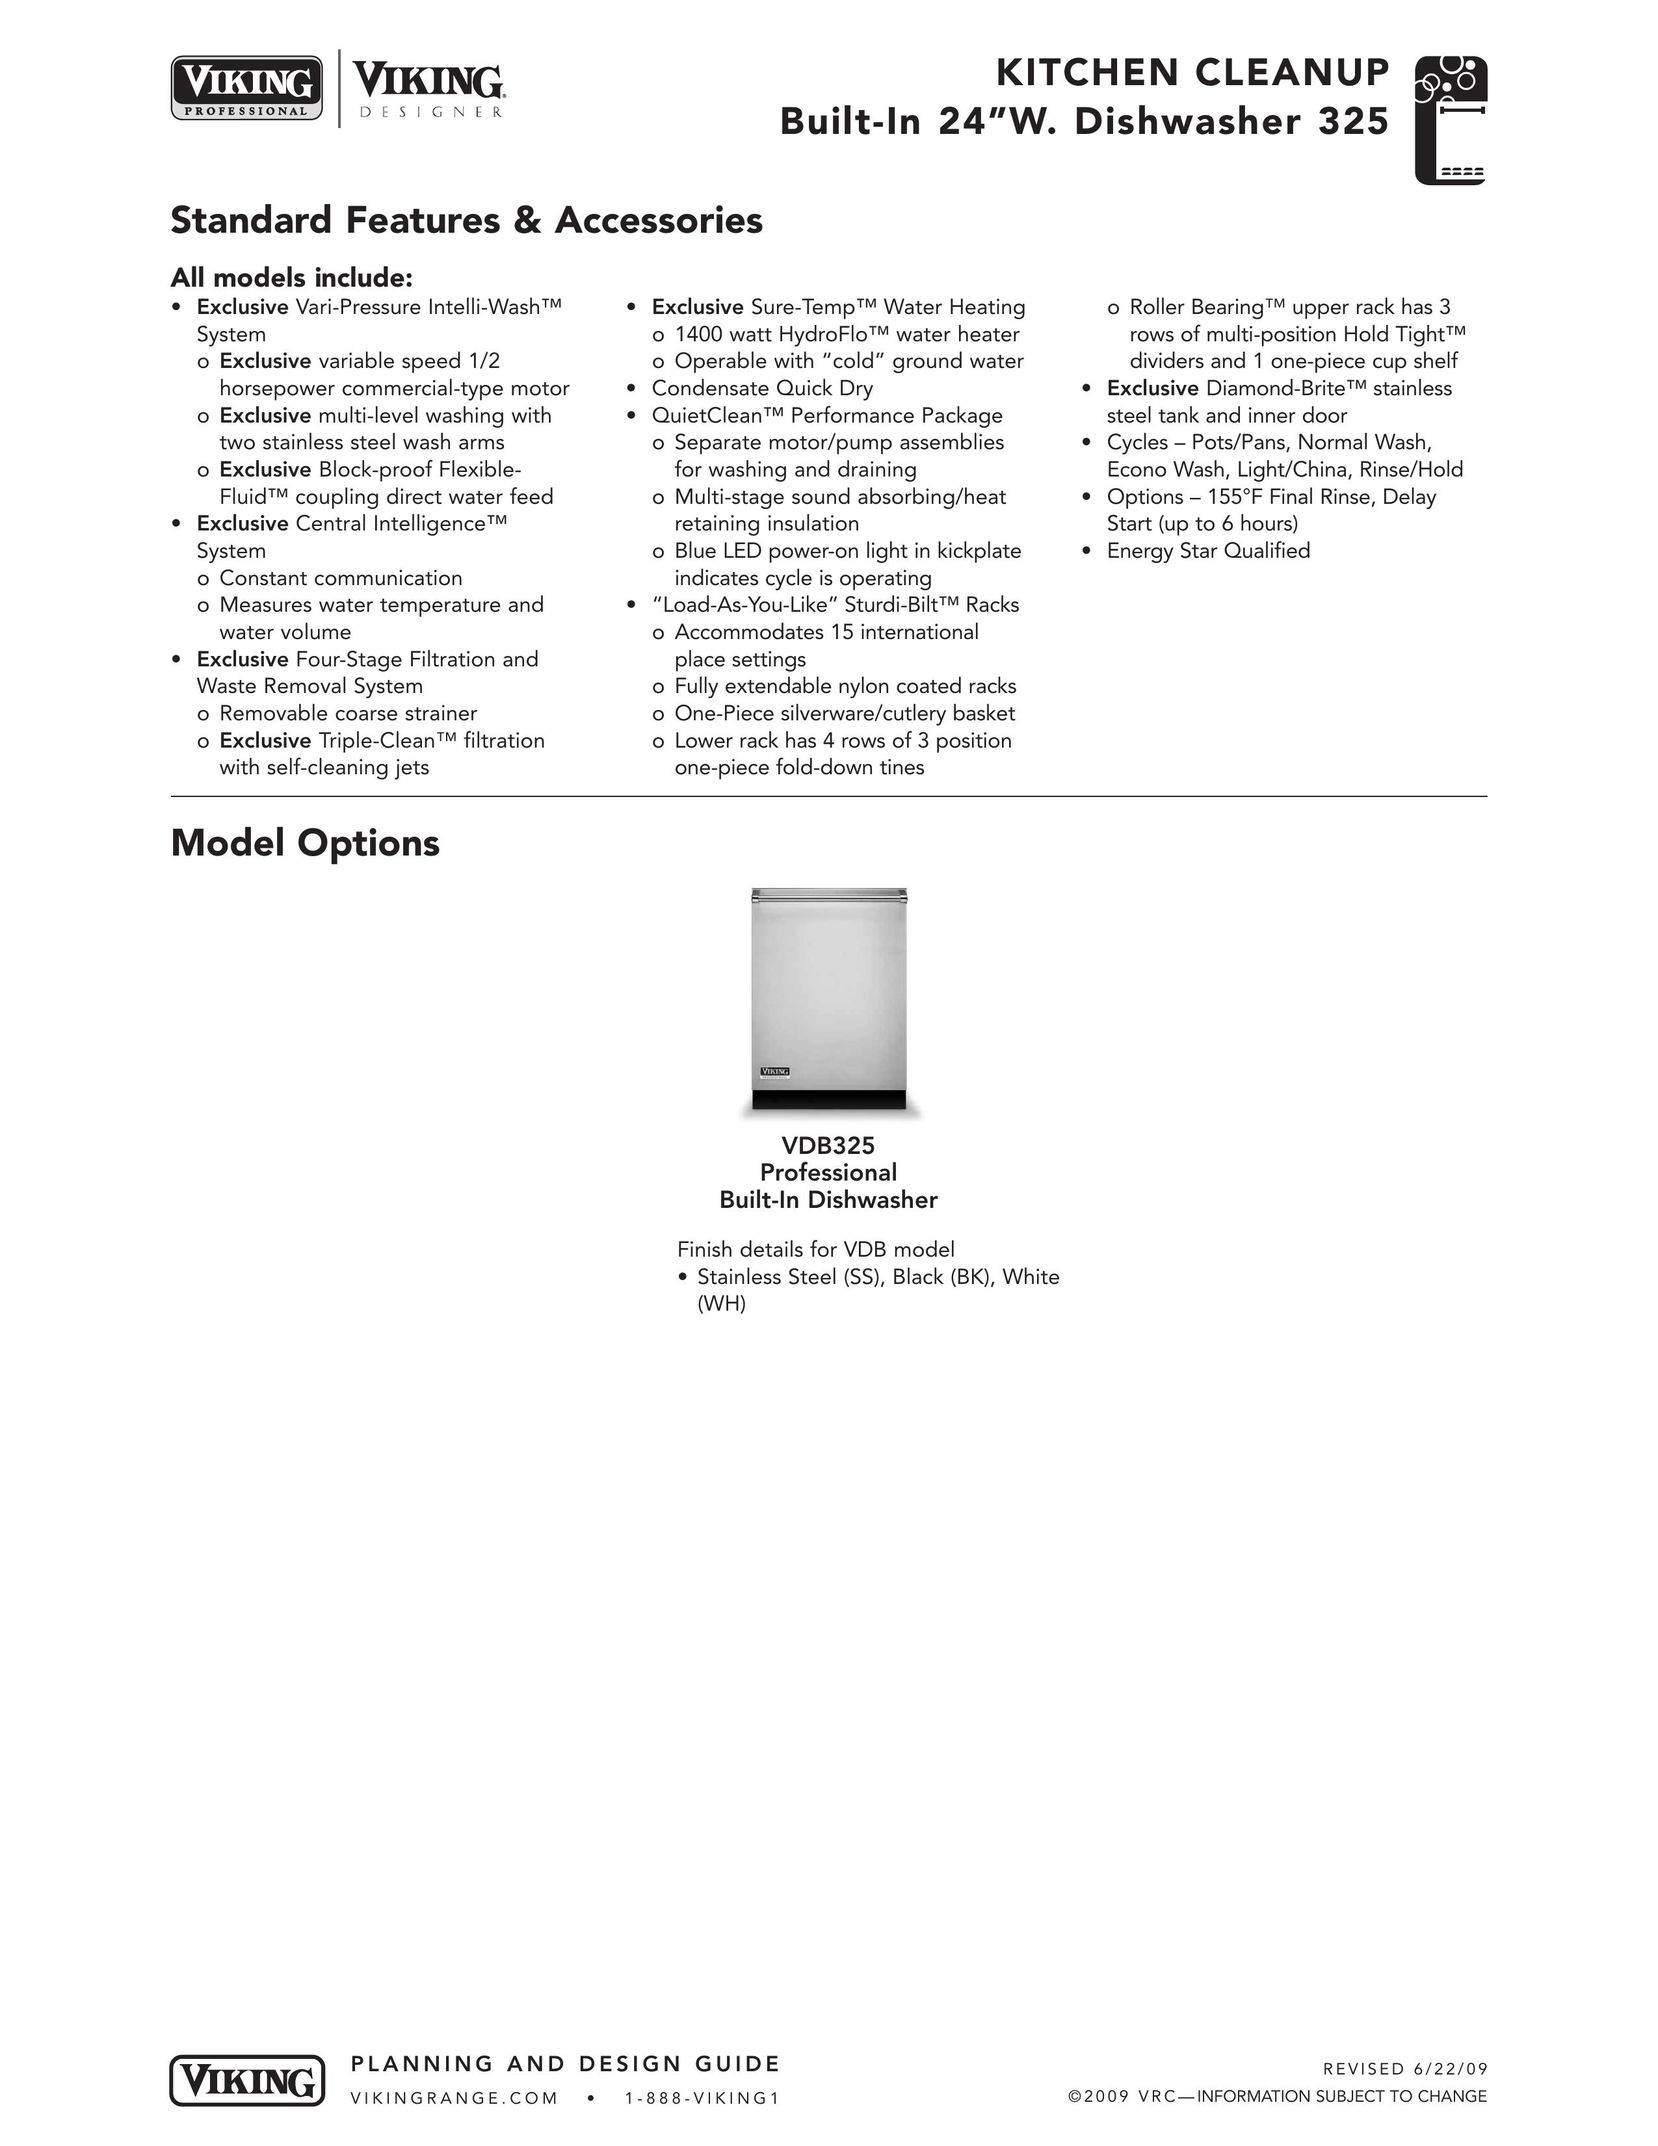 Viking VDB325 Dishwasher User Manual